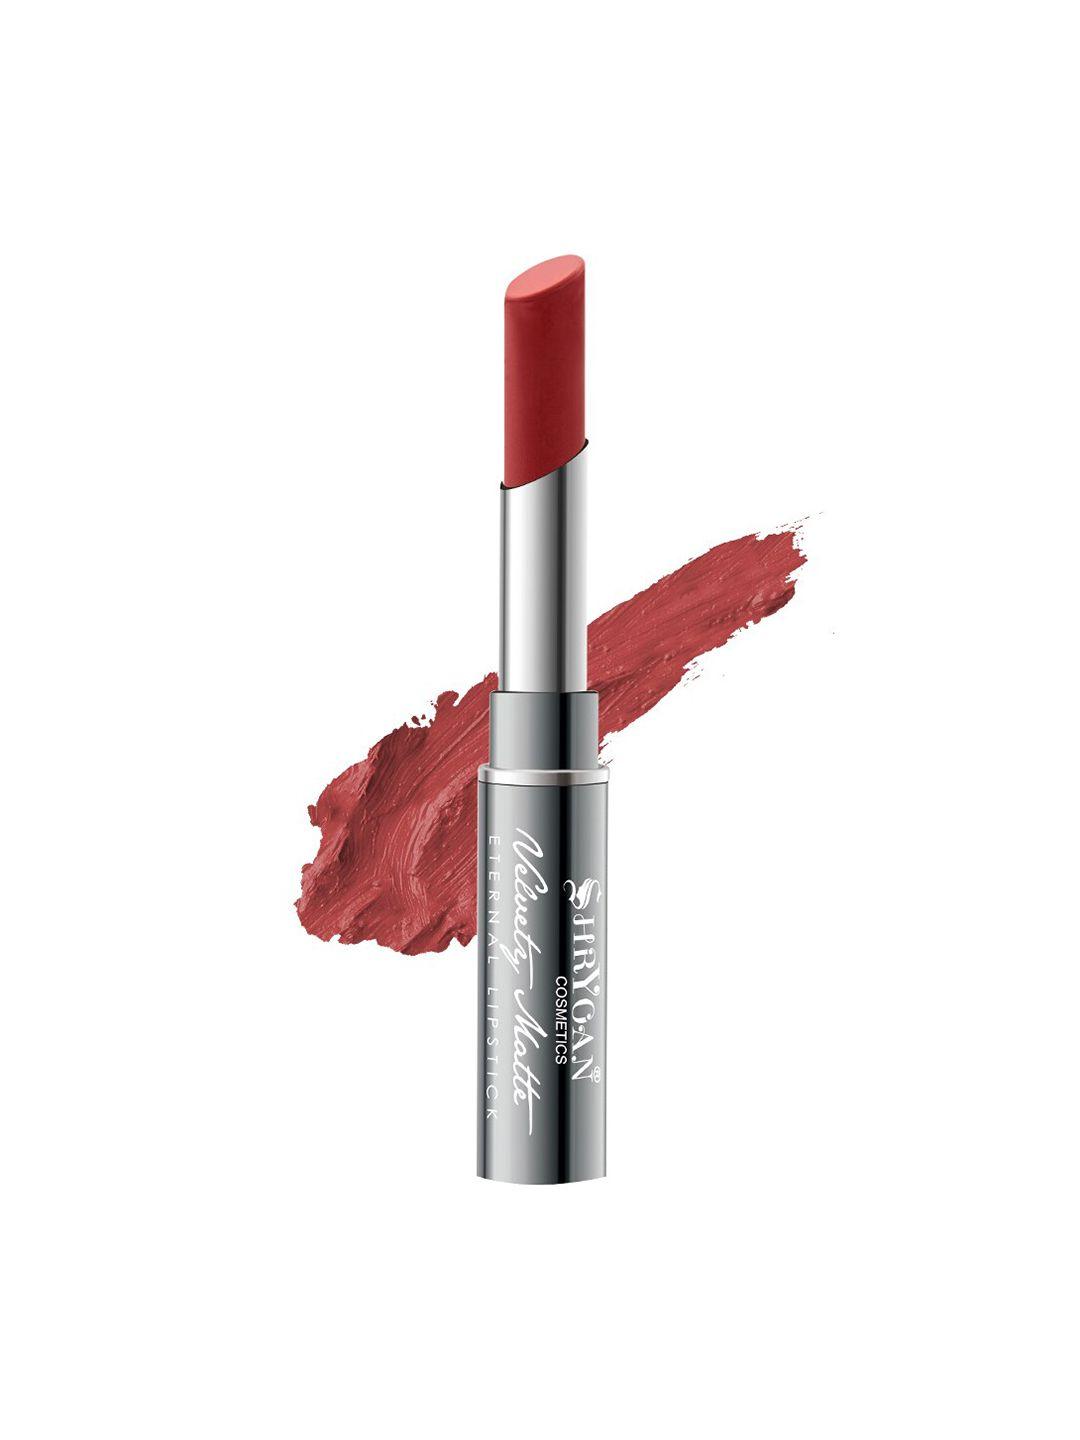 shryoan velvety matte non-transfer eternal lipstick - nude show 18